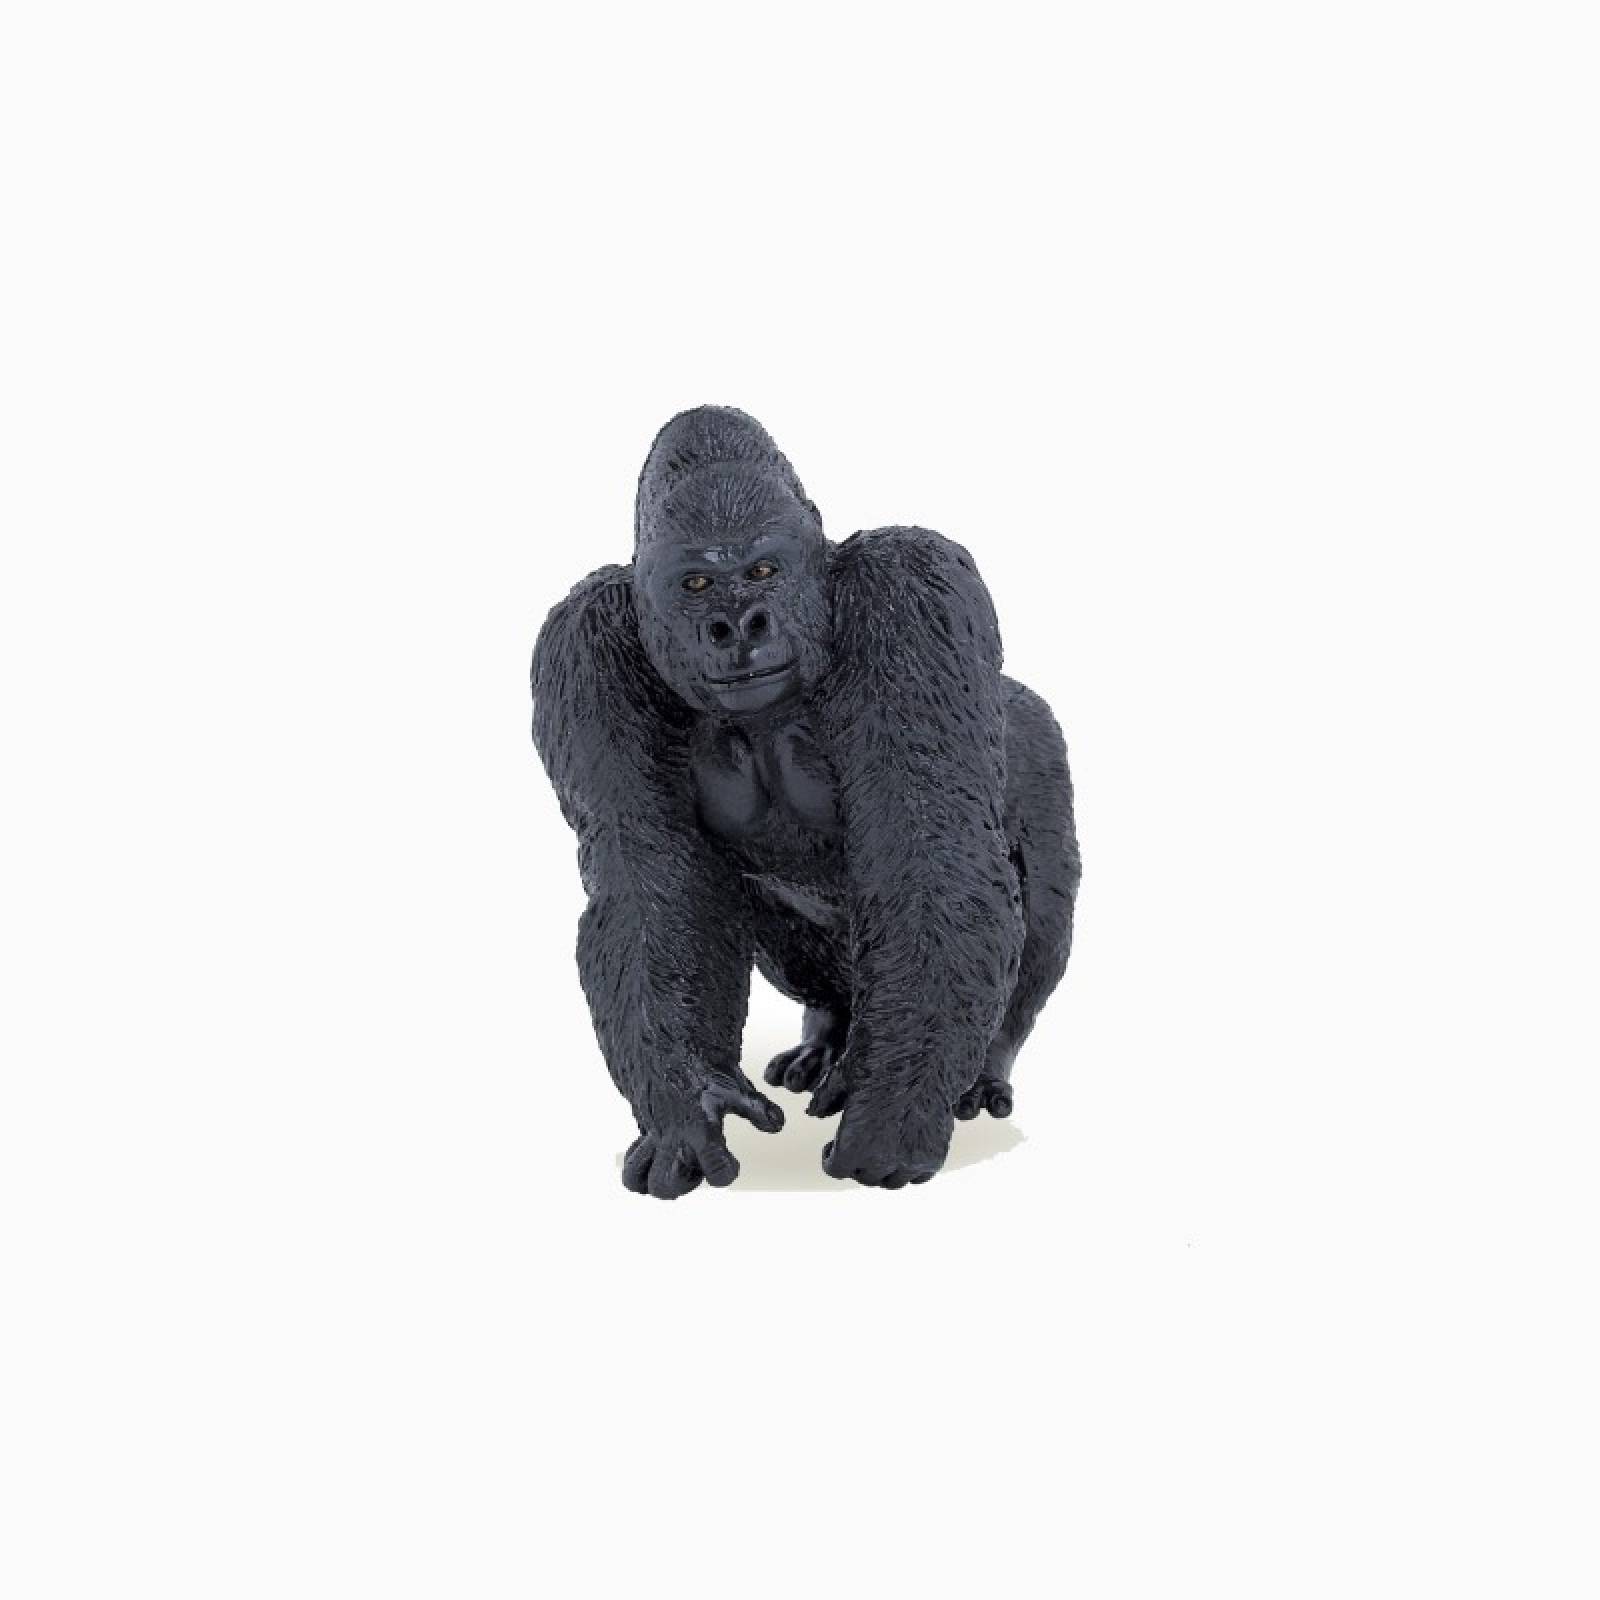 Gorilla - Papo Wild Animal Figure